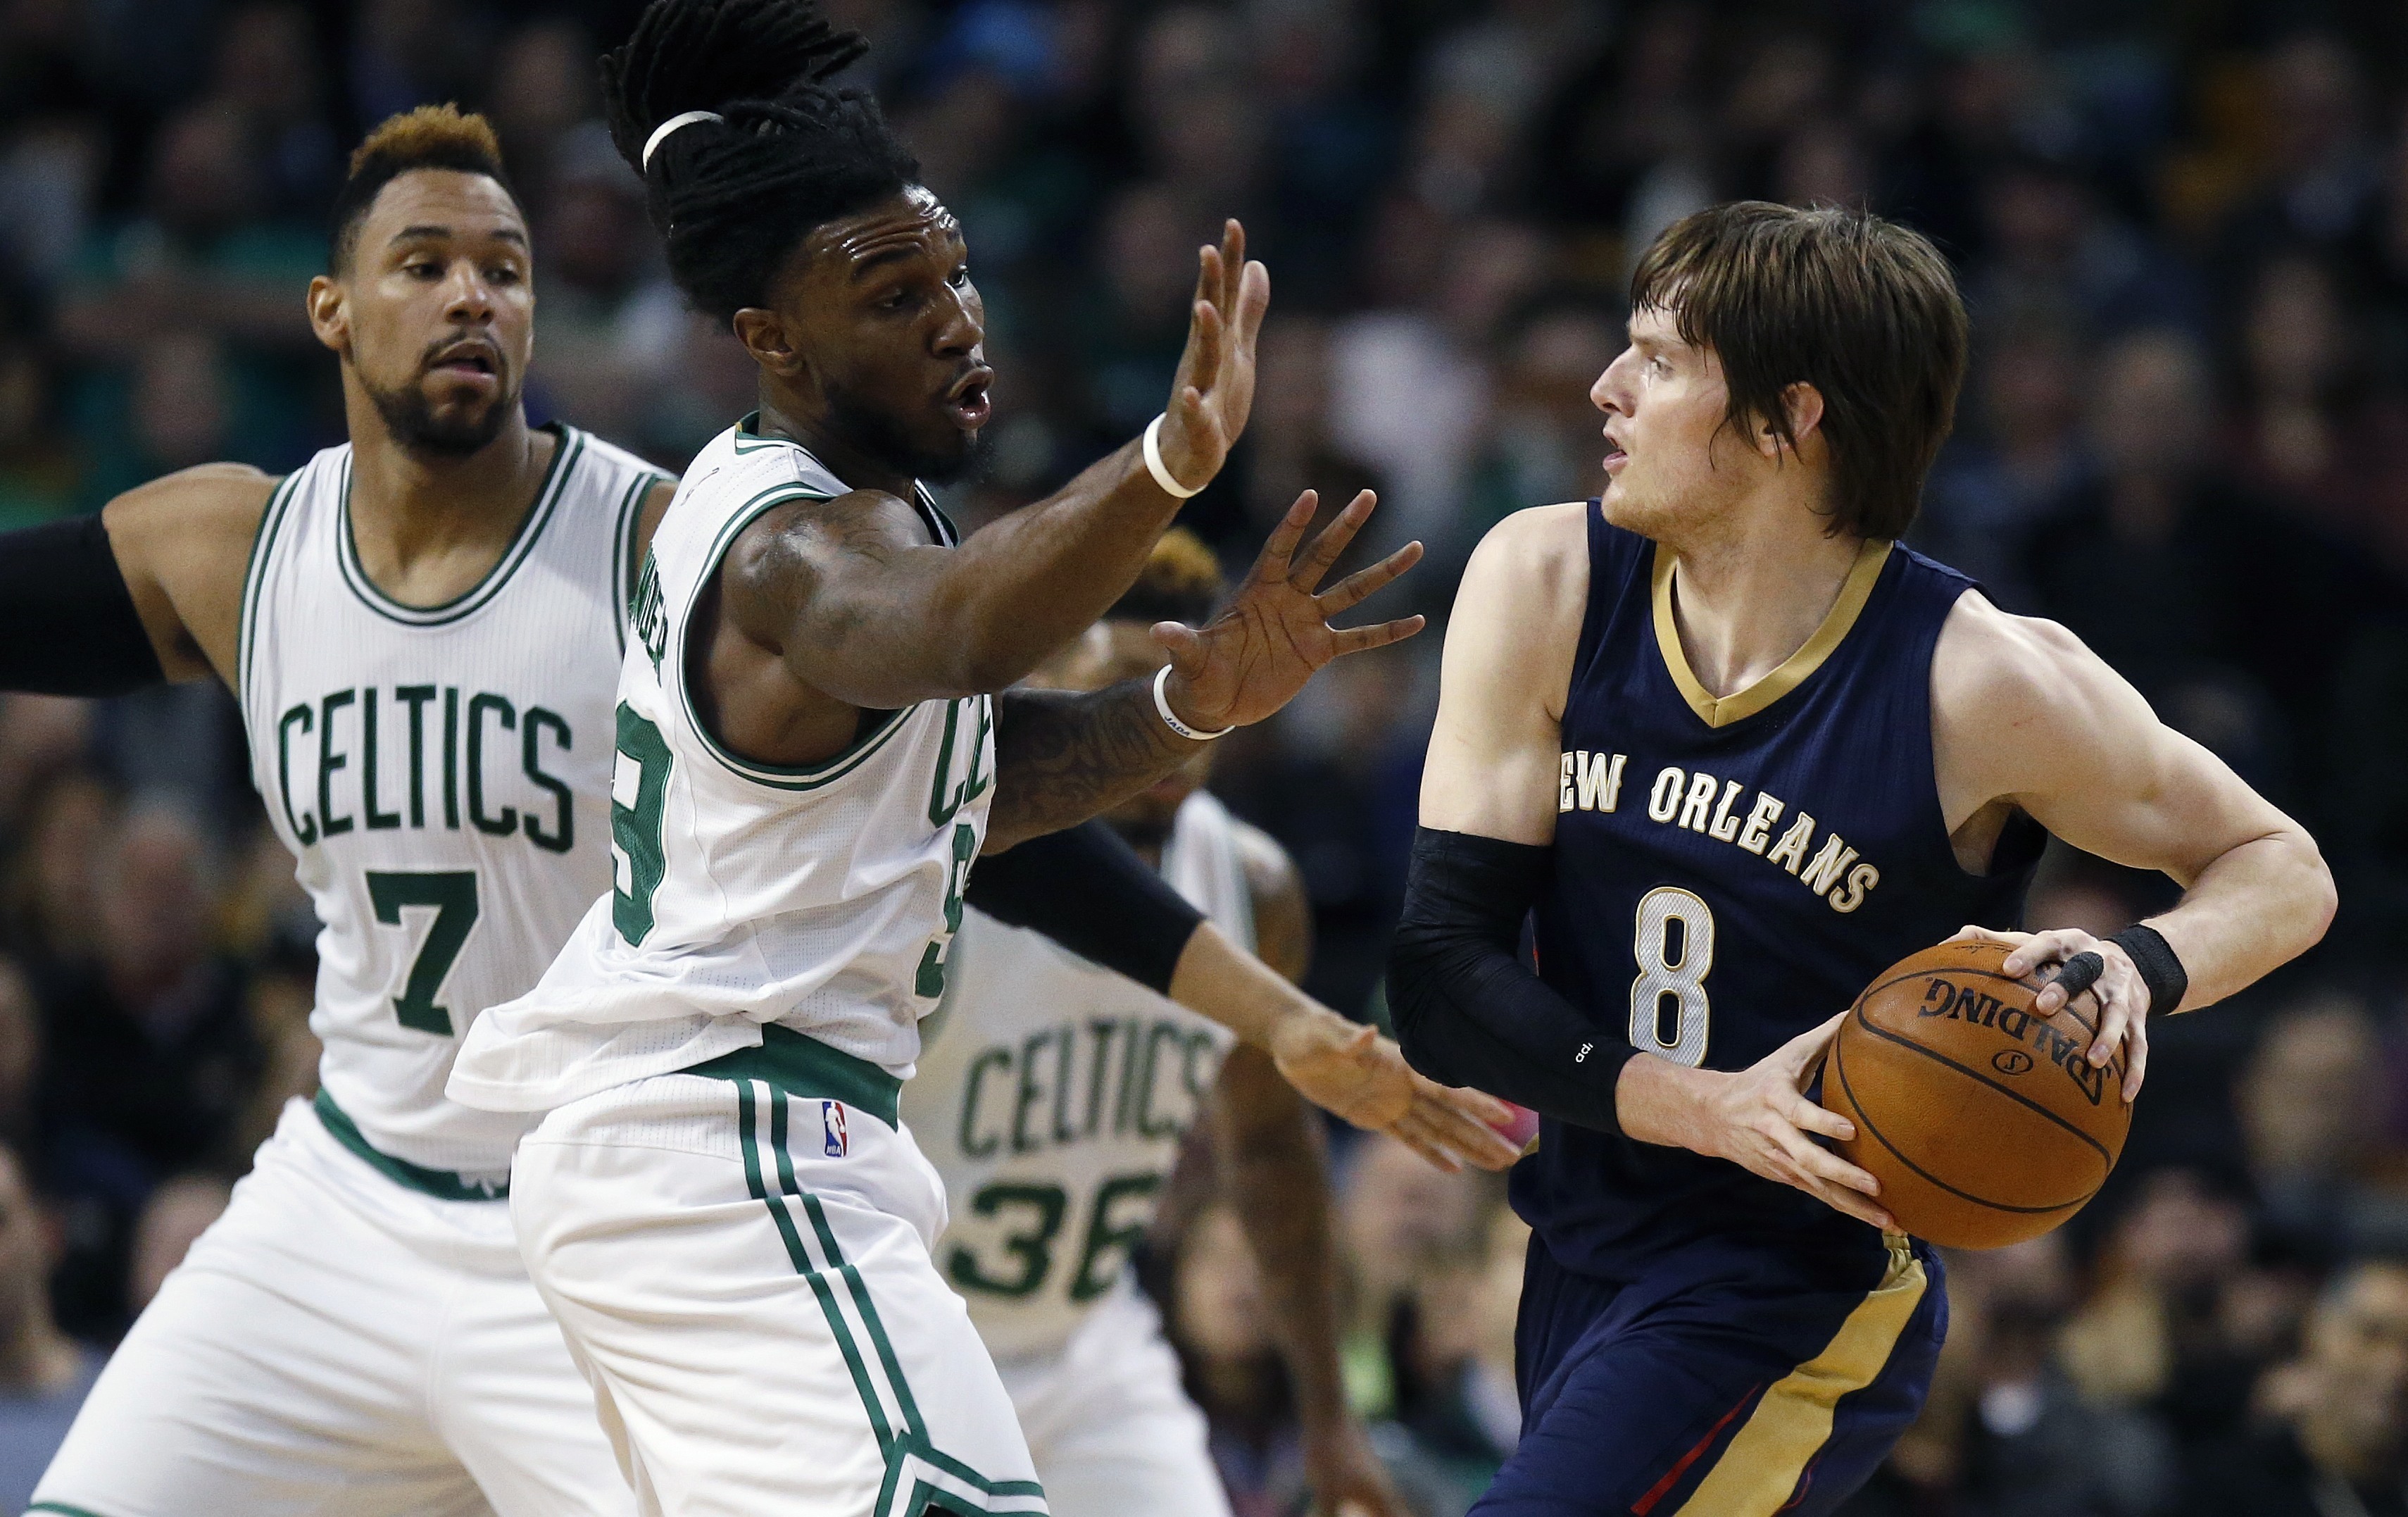 Boston Celtics' Jared Sullinger (7) and Jae Crowder, center, defend against New Orleans Pelicans' Luke Babbitt (8) during the second quarter of an NBA basketball game in Boston, Wednesday, April 6, 2016. AP